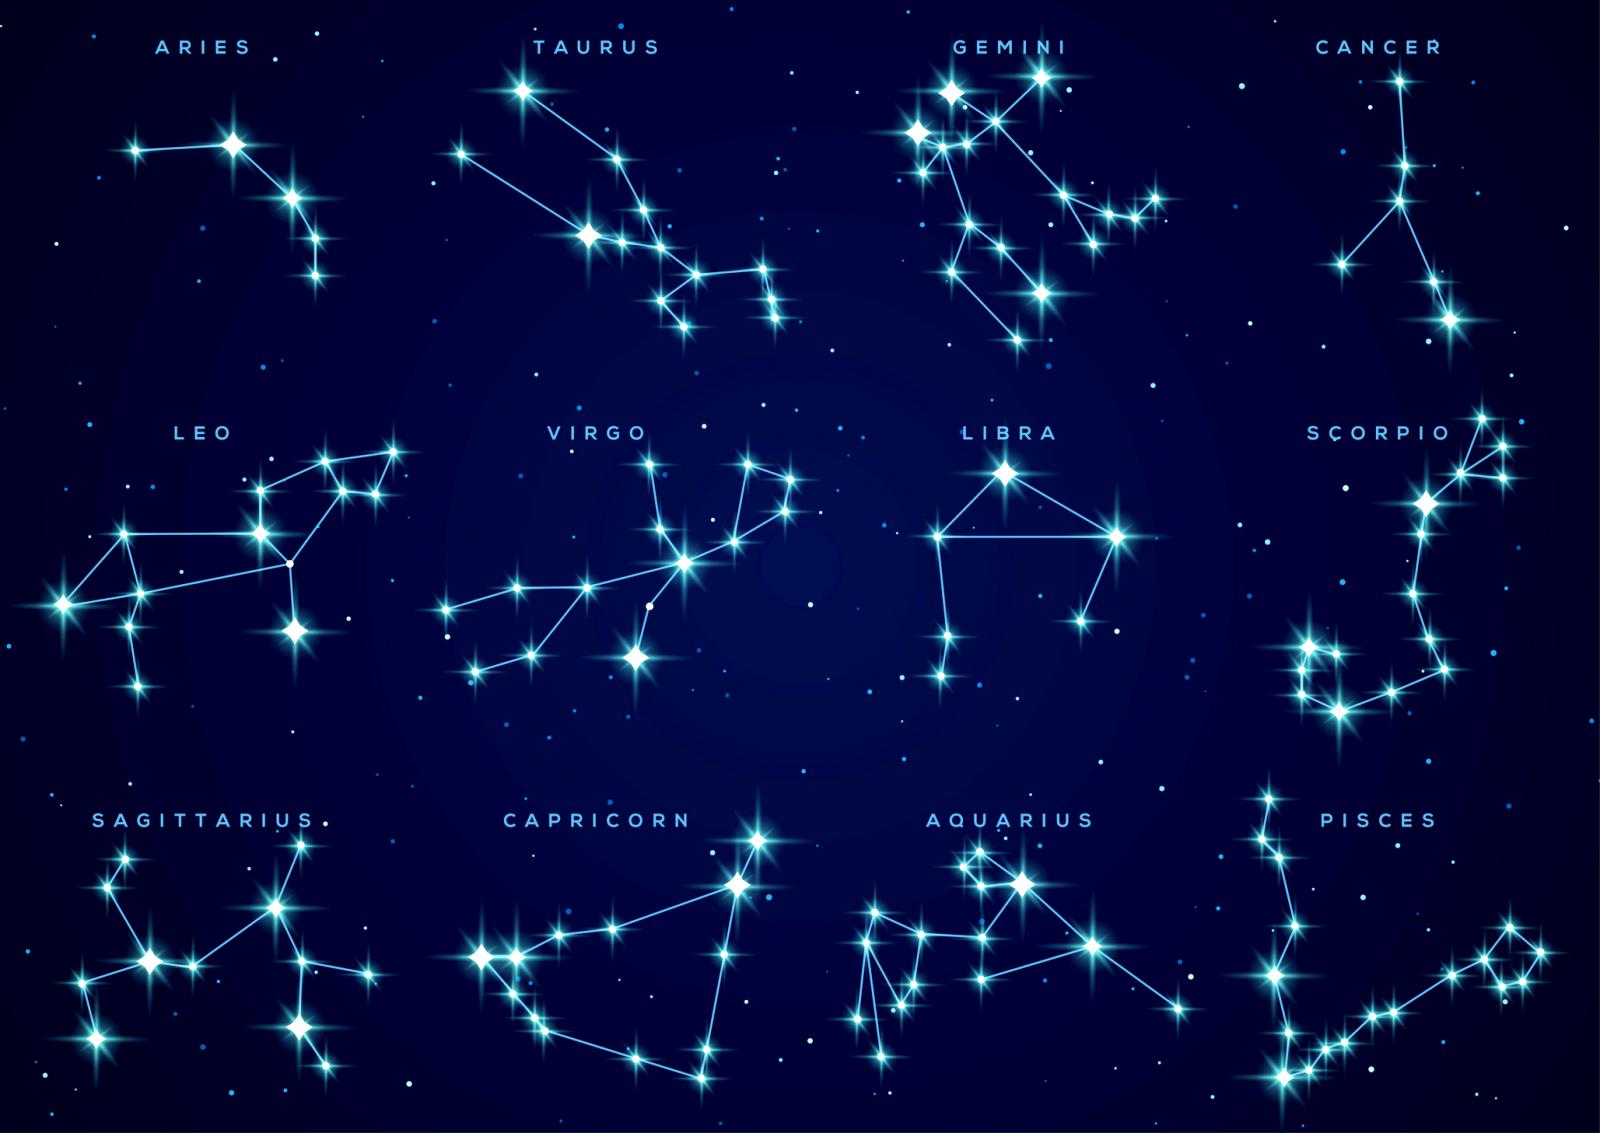 constellations du zodiaque